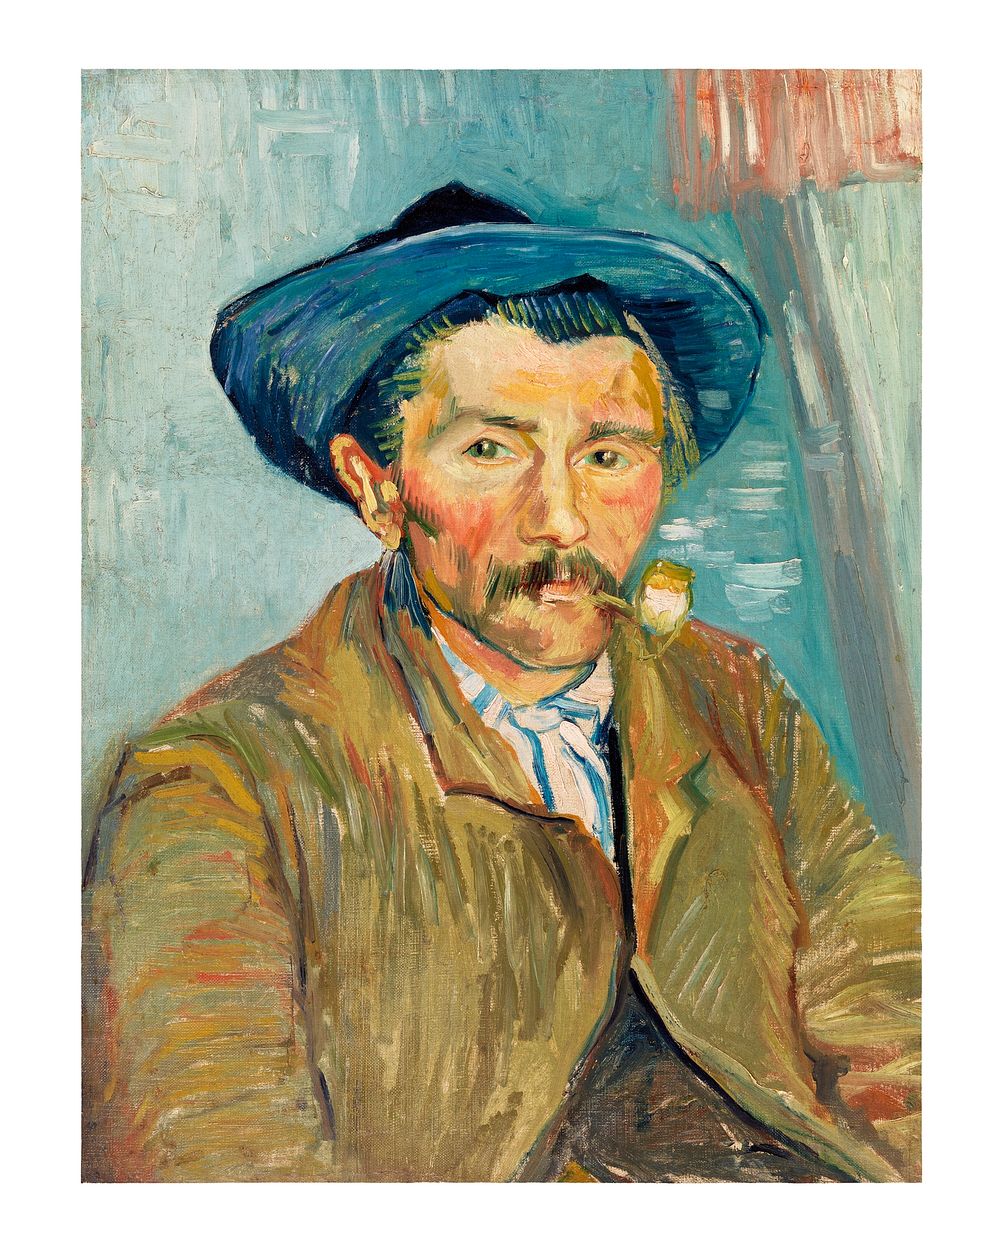 Van Gogh art print, The Smoker portrait painting (1888). Original from the Barnes Foundation. Digitally enhanced by rawpixel.